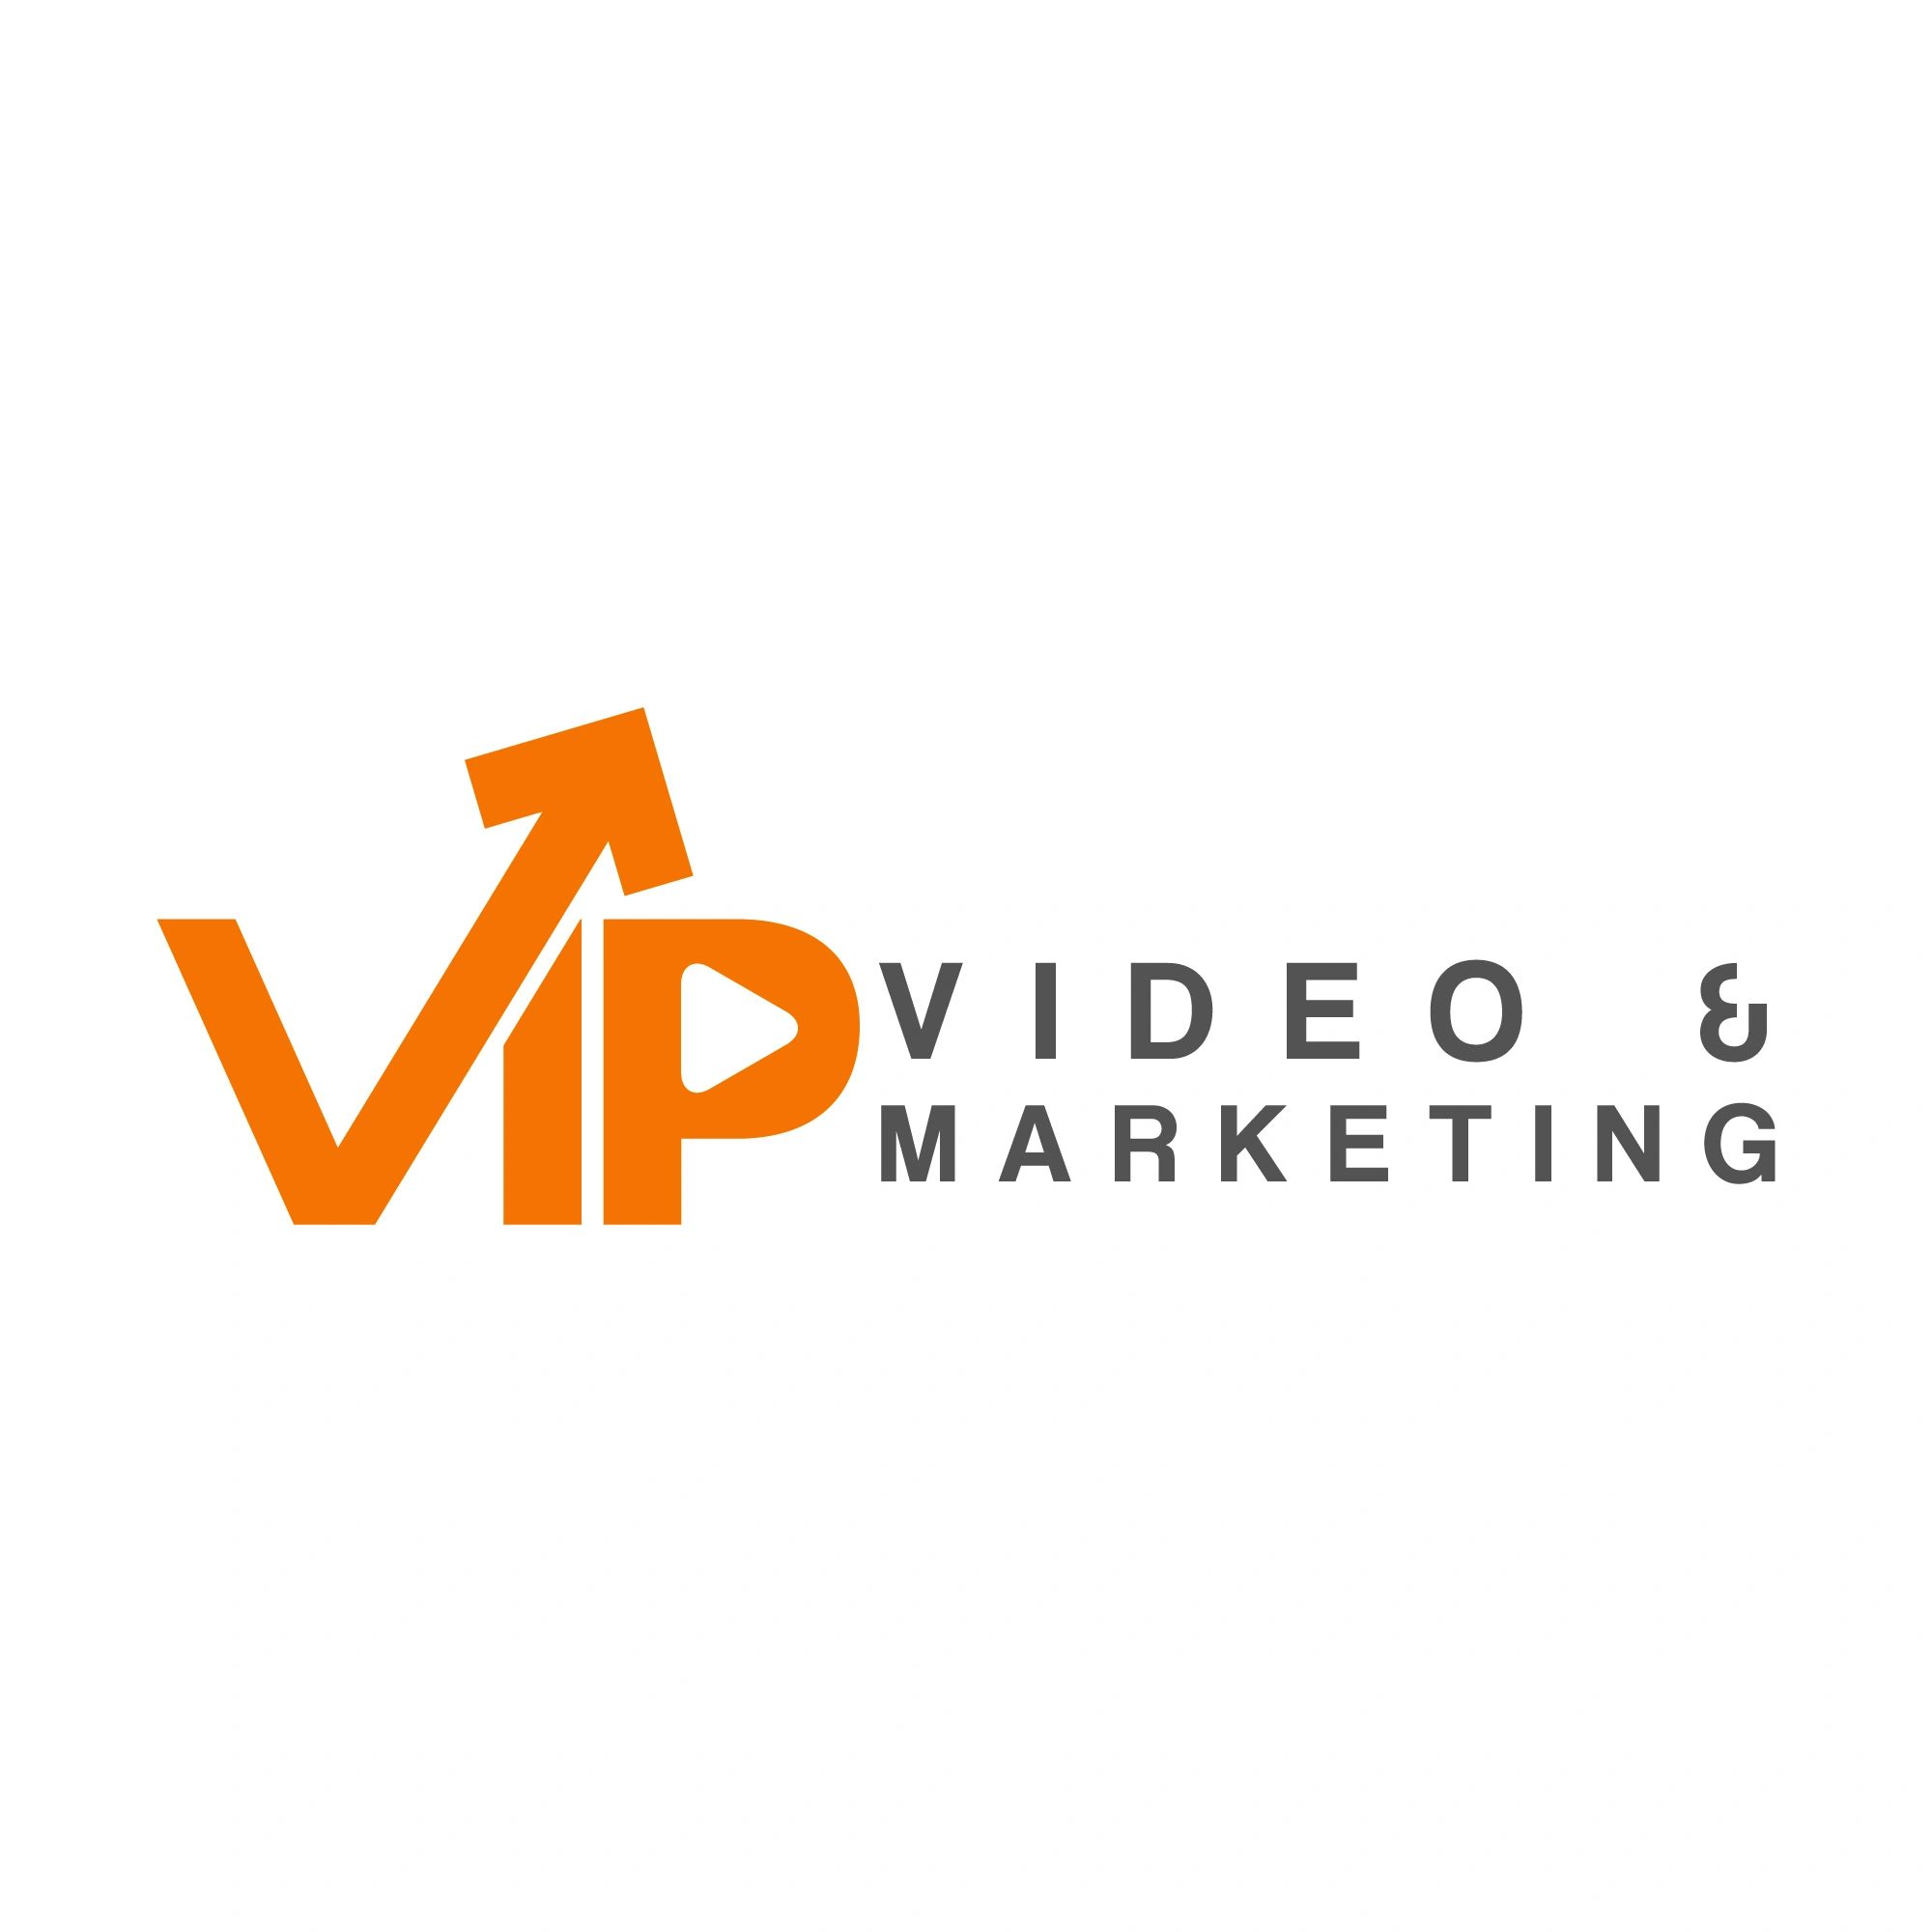 VIP Video & Marketing